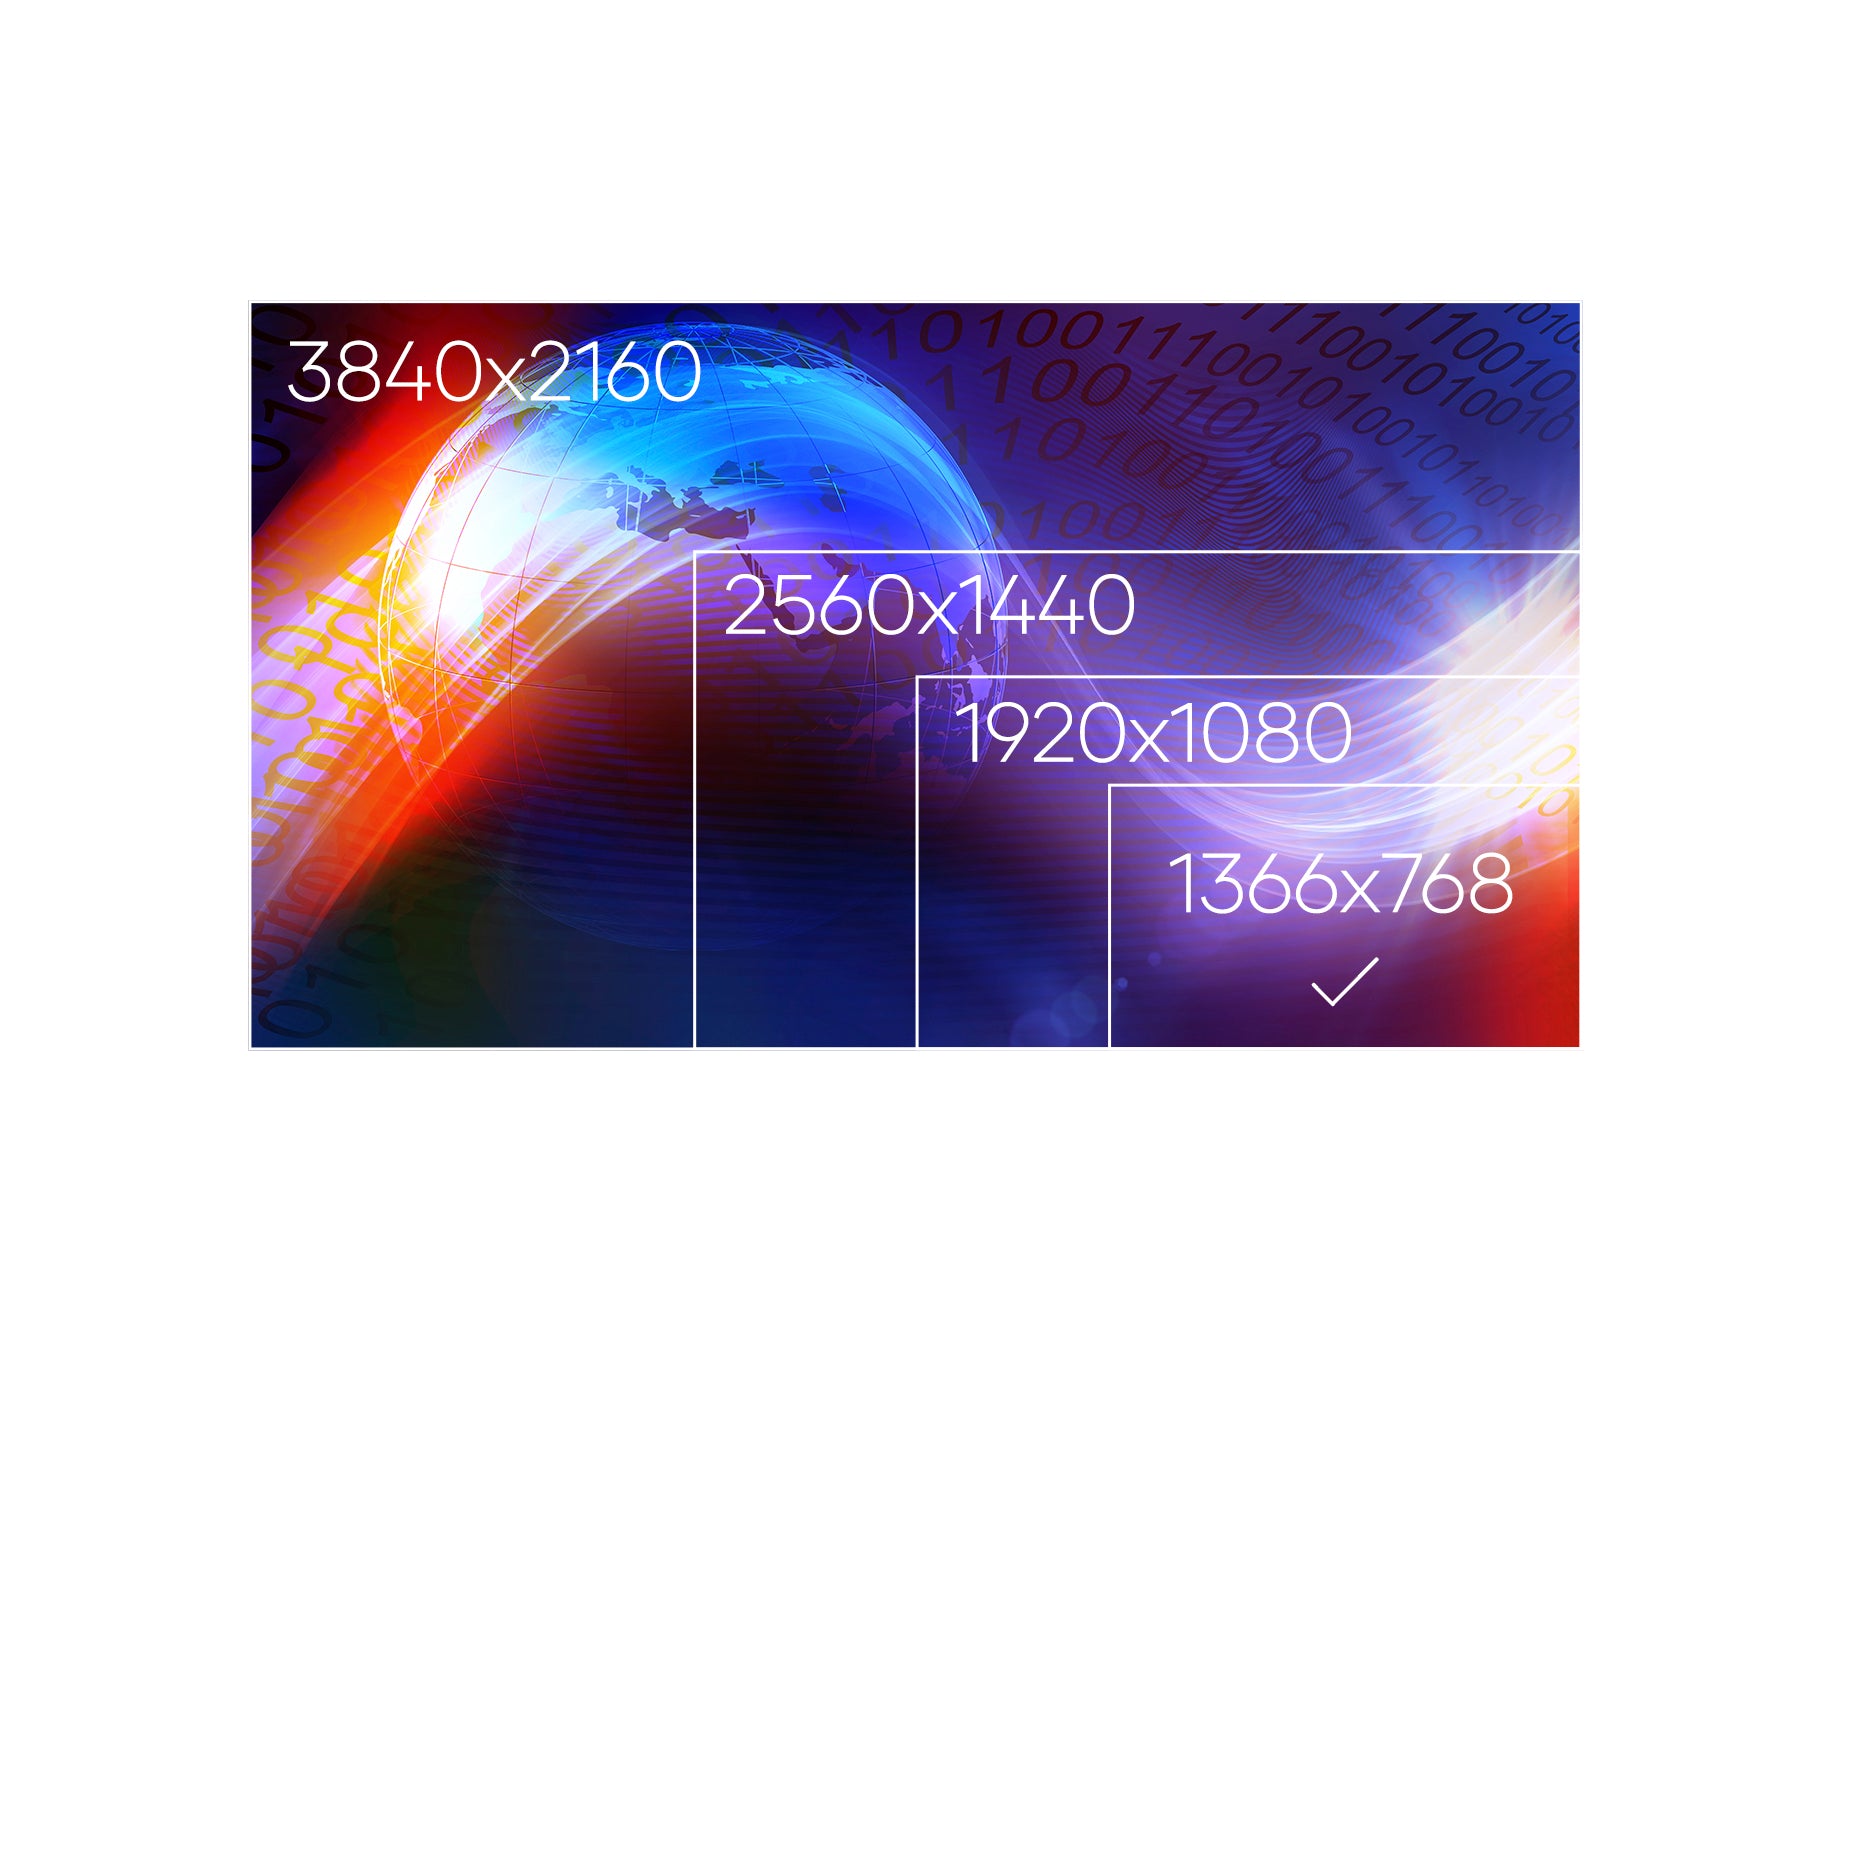 Sager NP6110 11.6" WXGA HD Matte LCD LED Display Screen